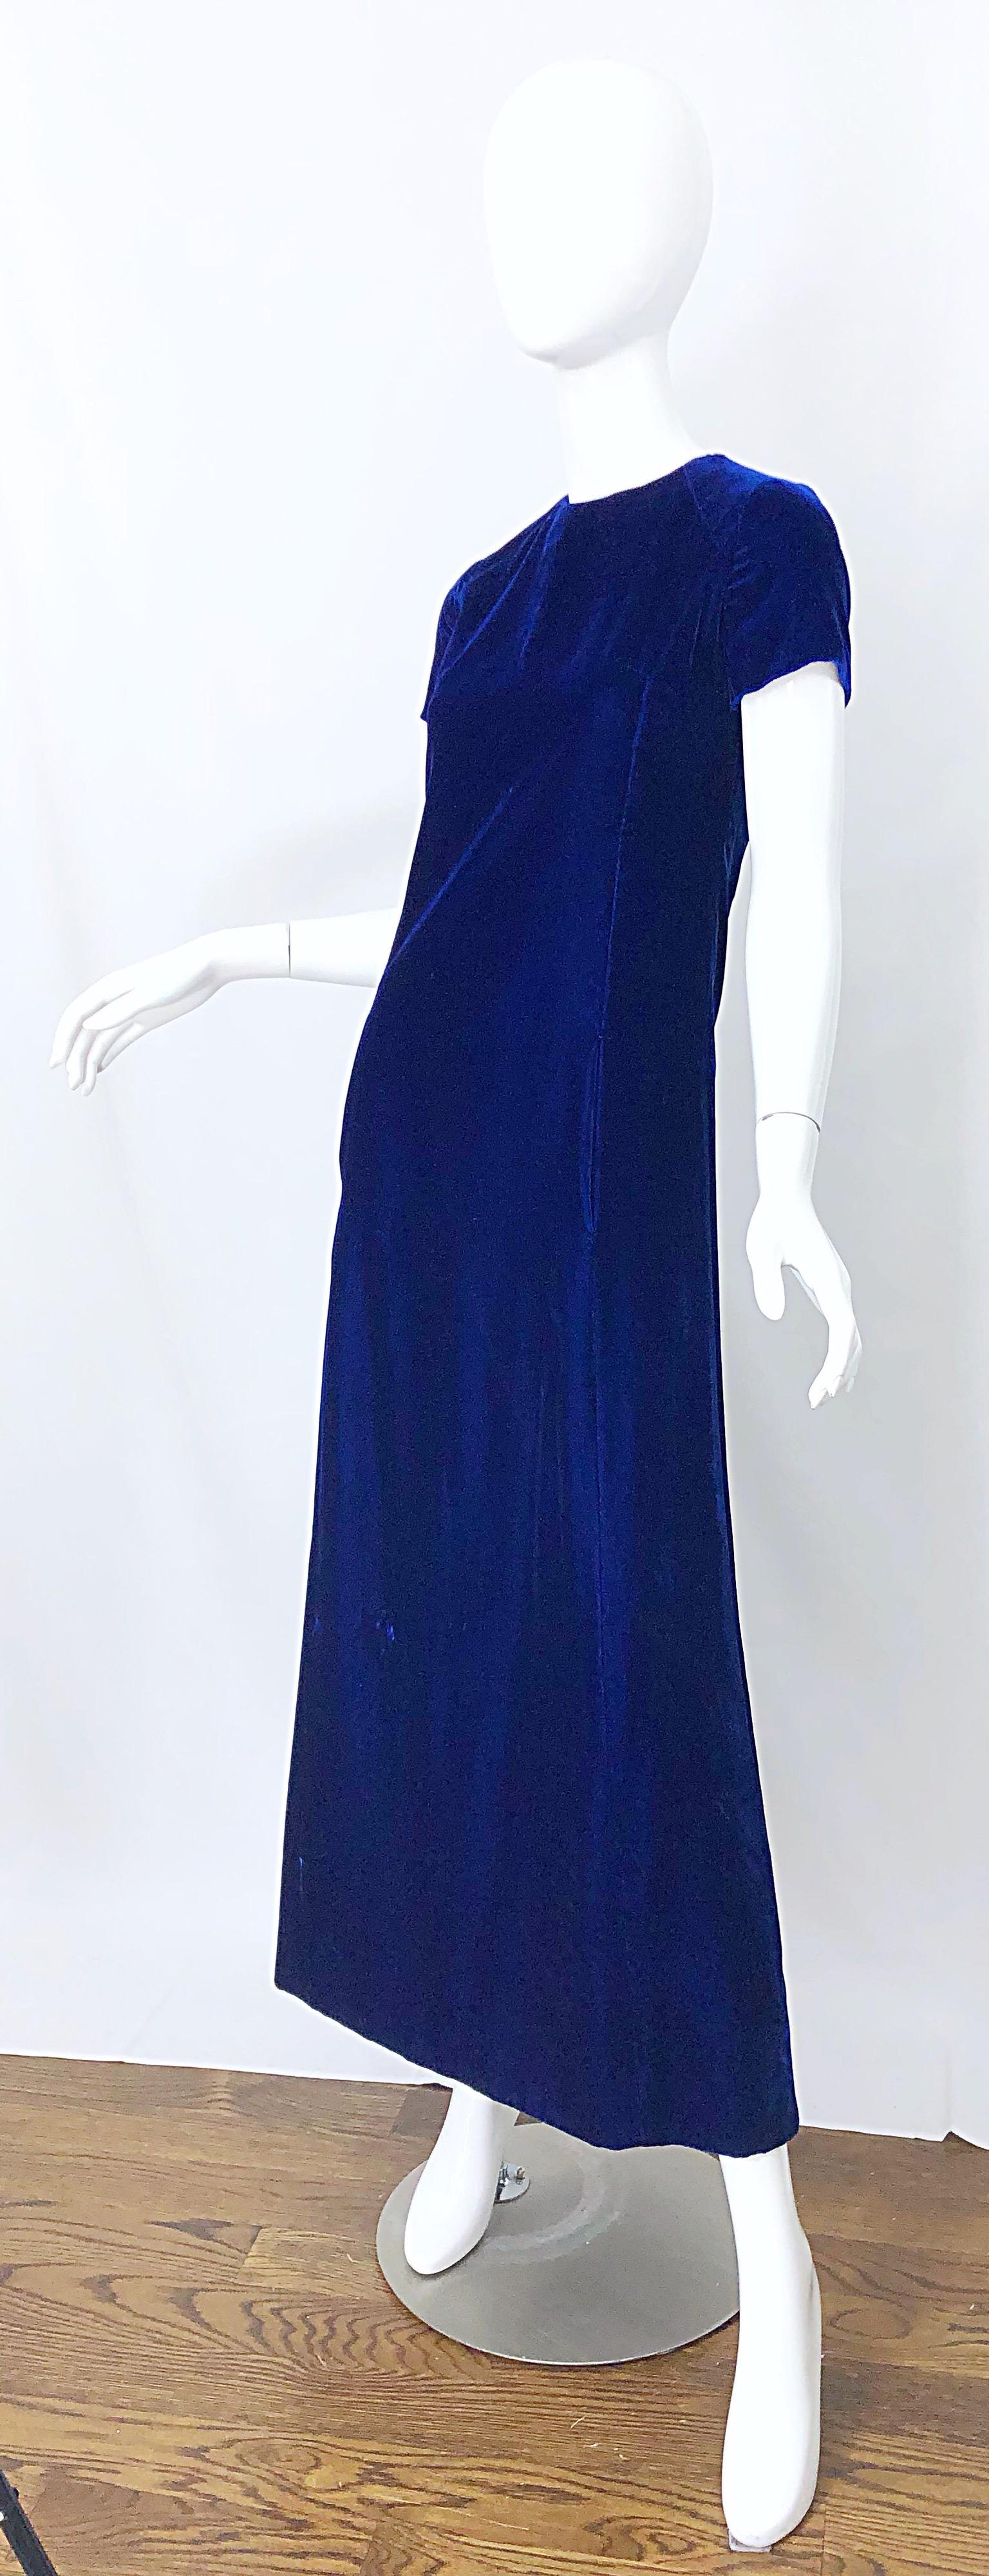 blue 70's dress